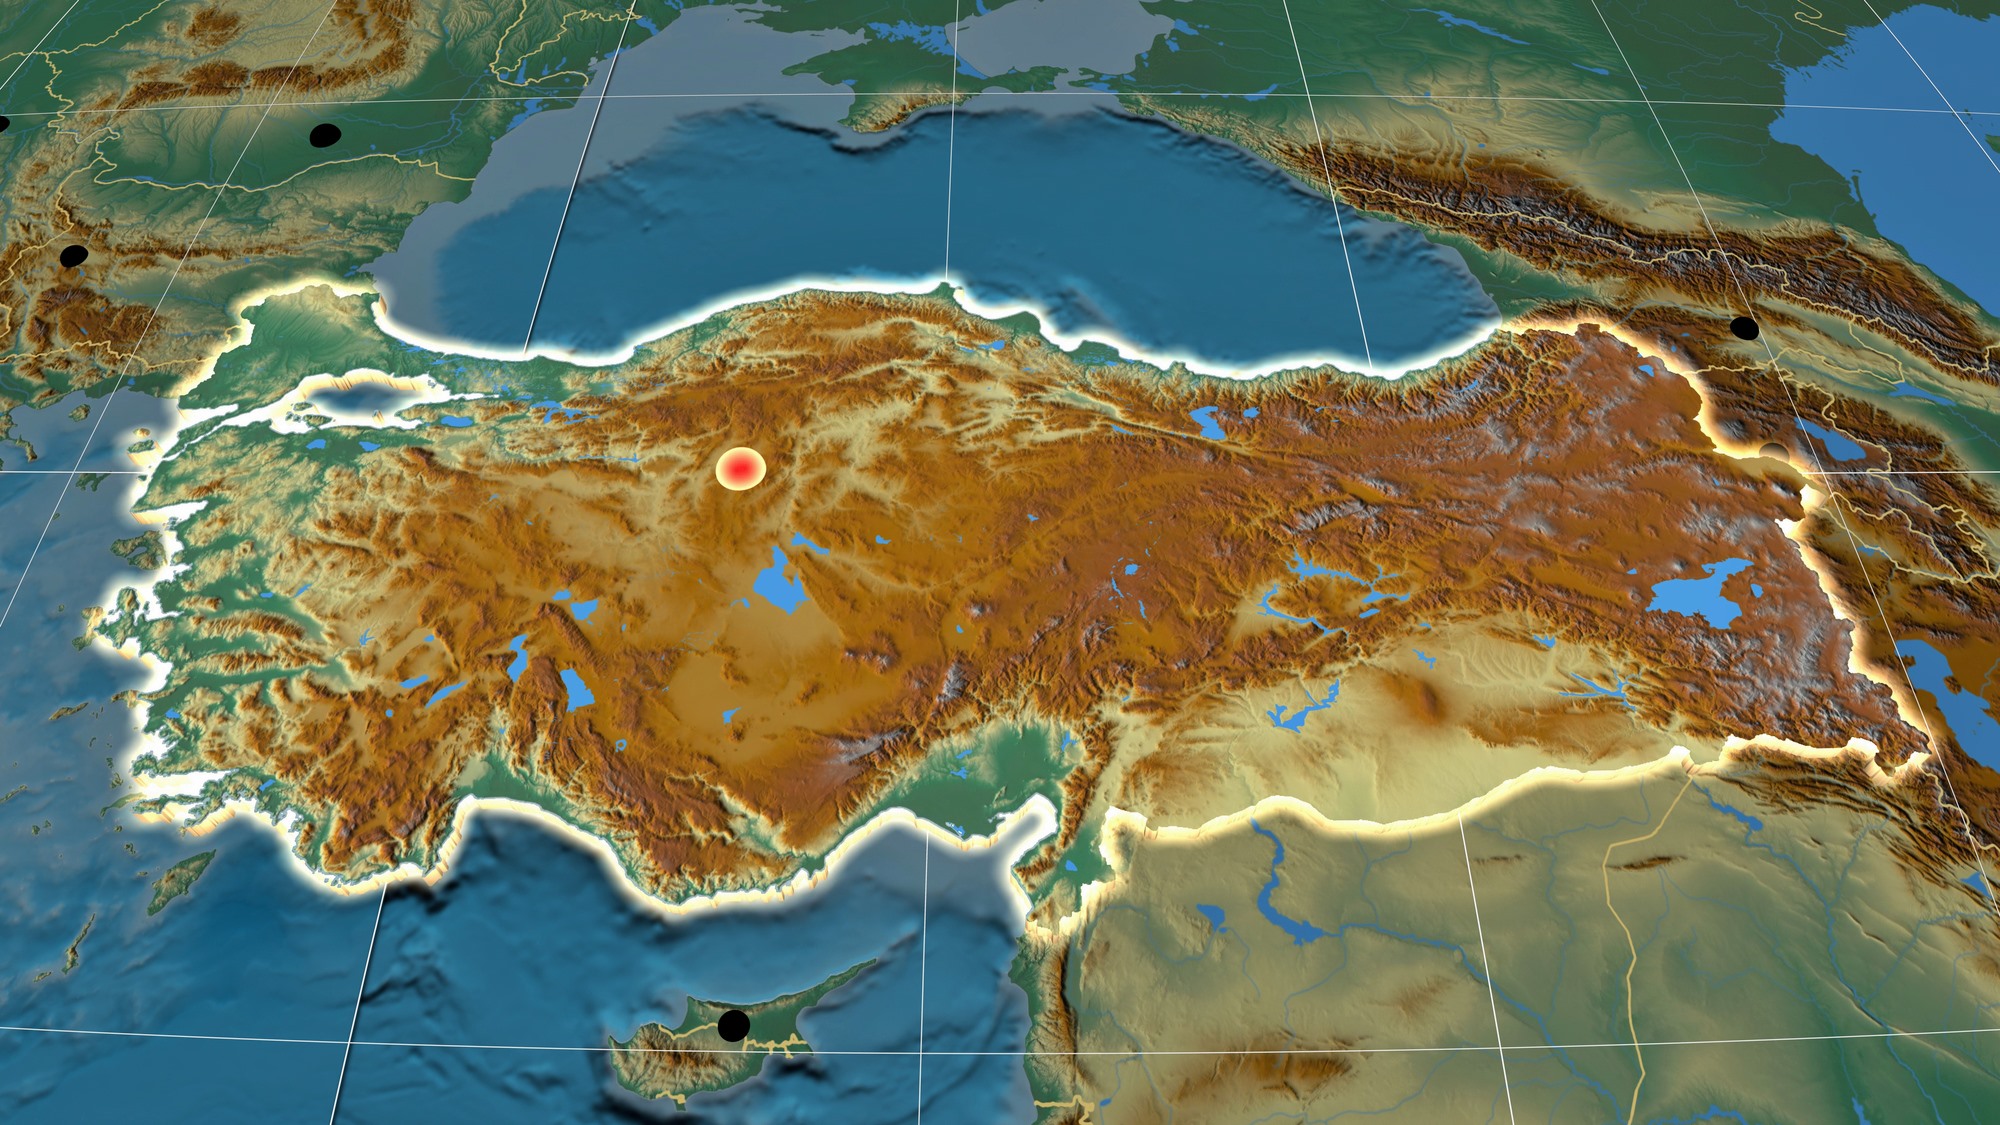 Turkey Physical Map